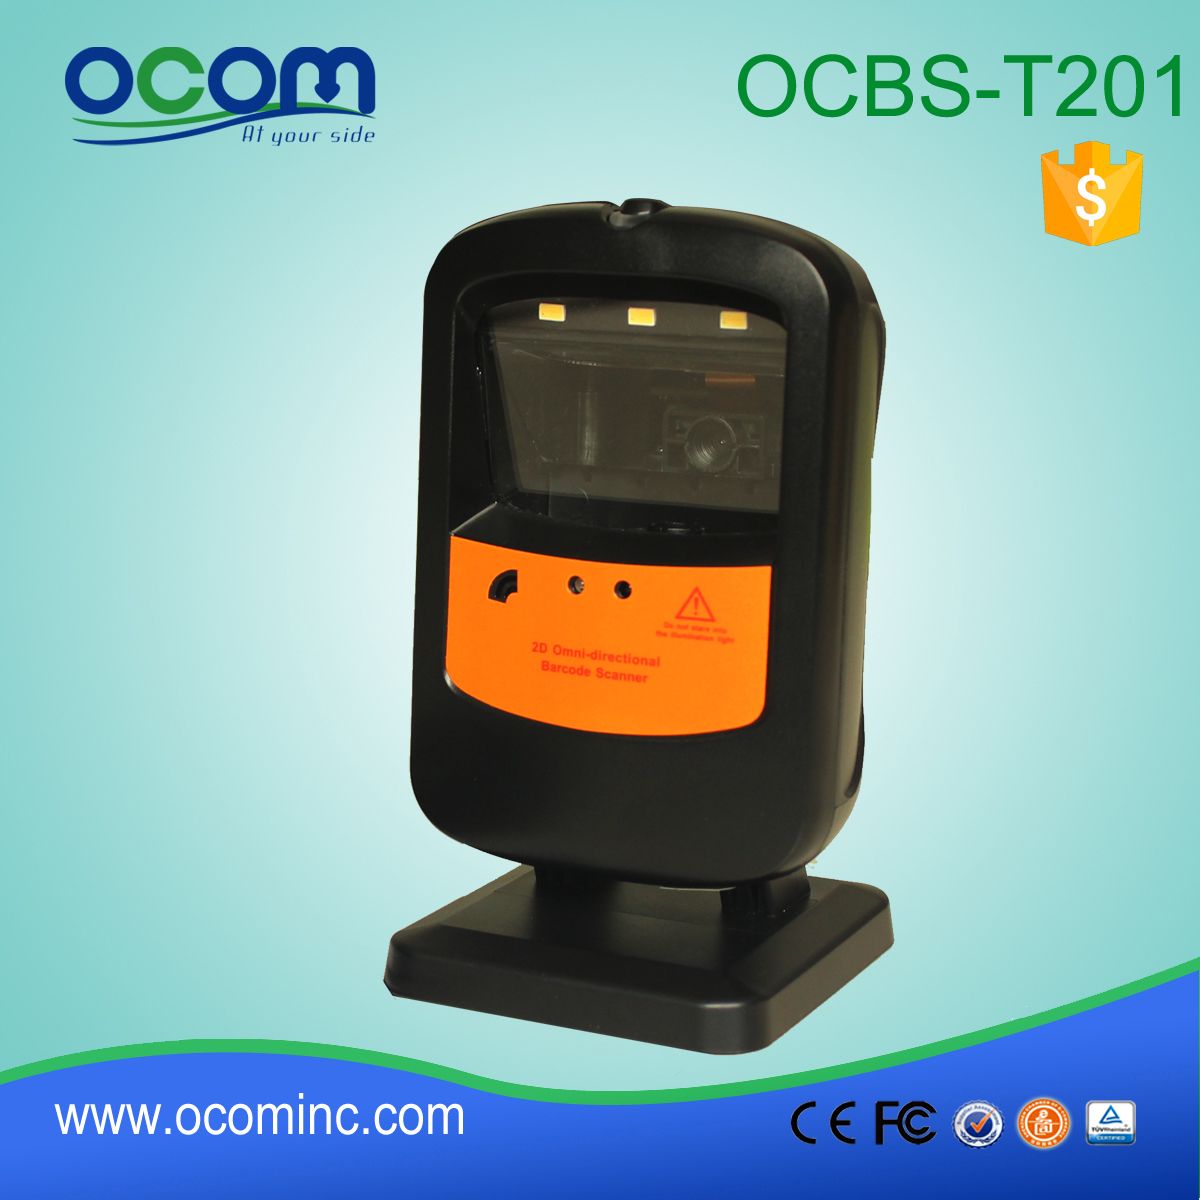 OCBs-T201: Barcode Scanner fornecedor filipinas, módulo de scanner de código de barras 2D